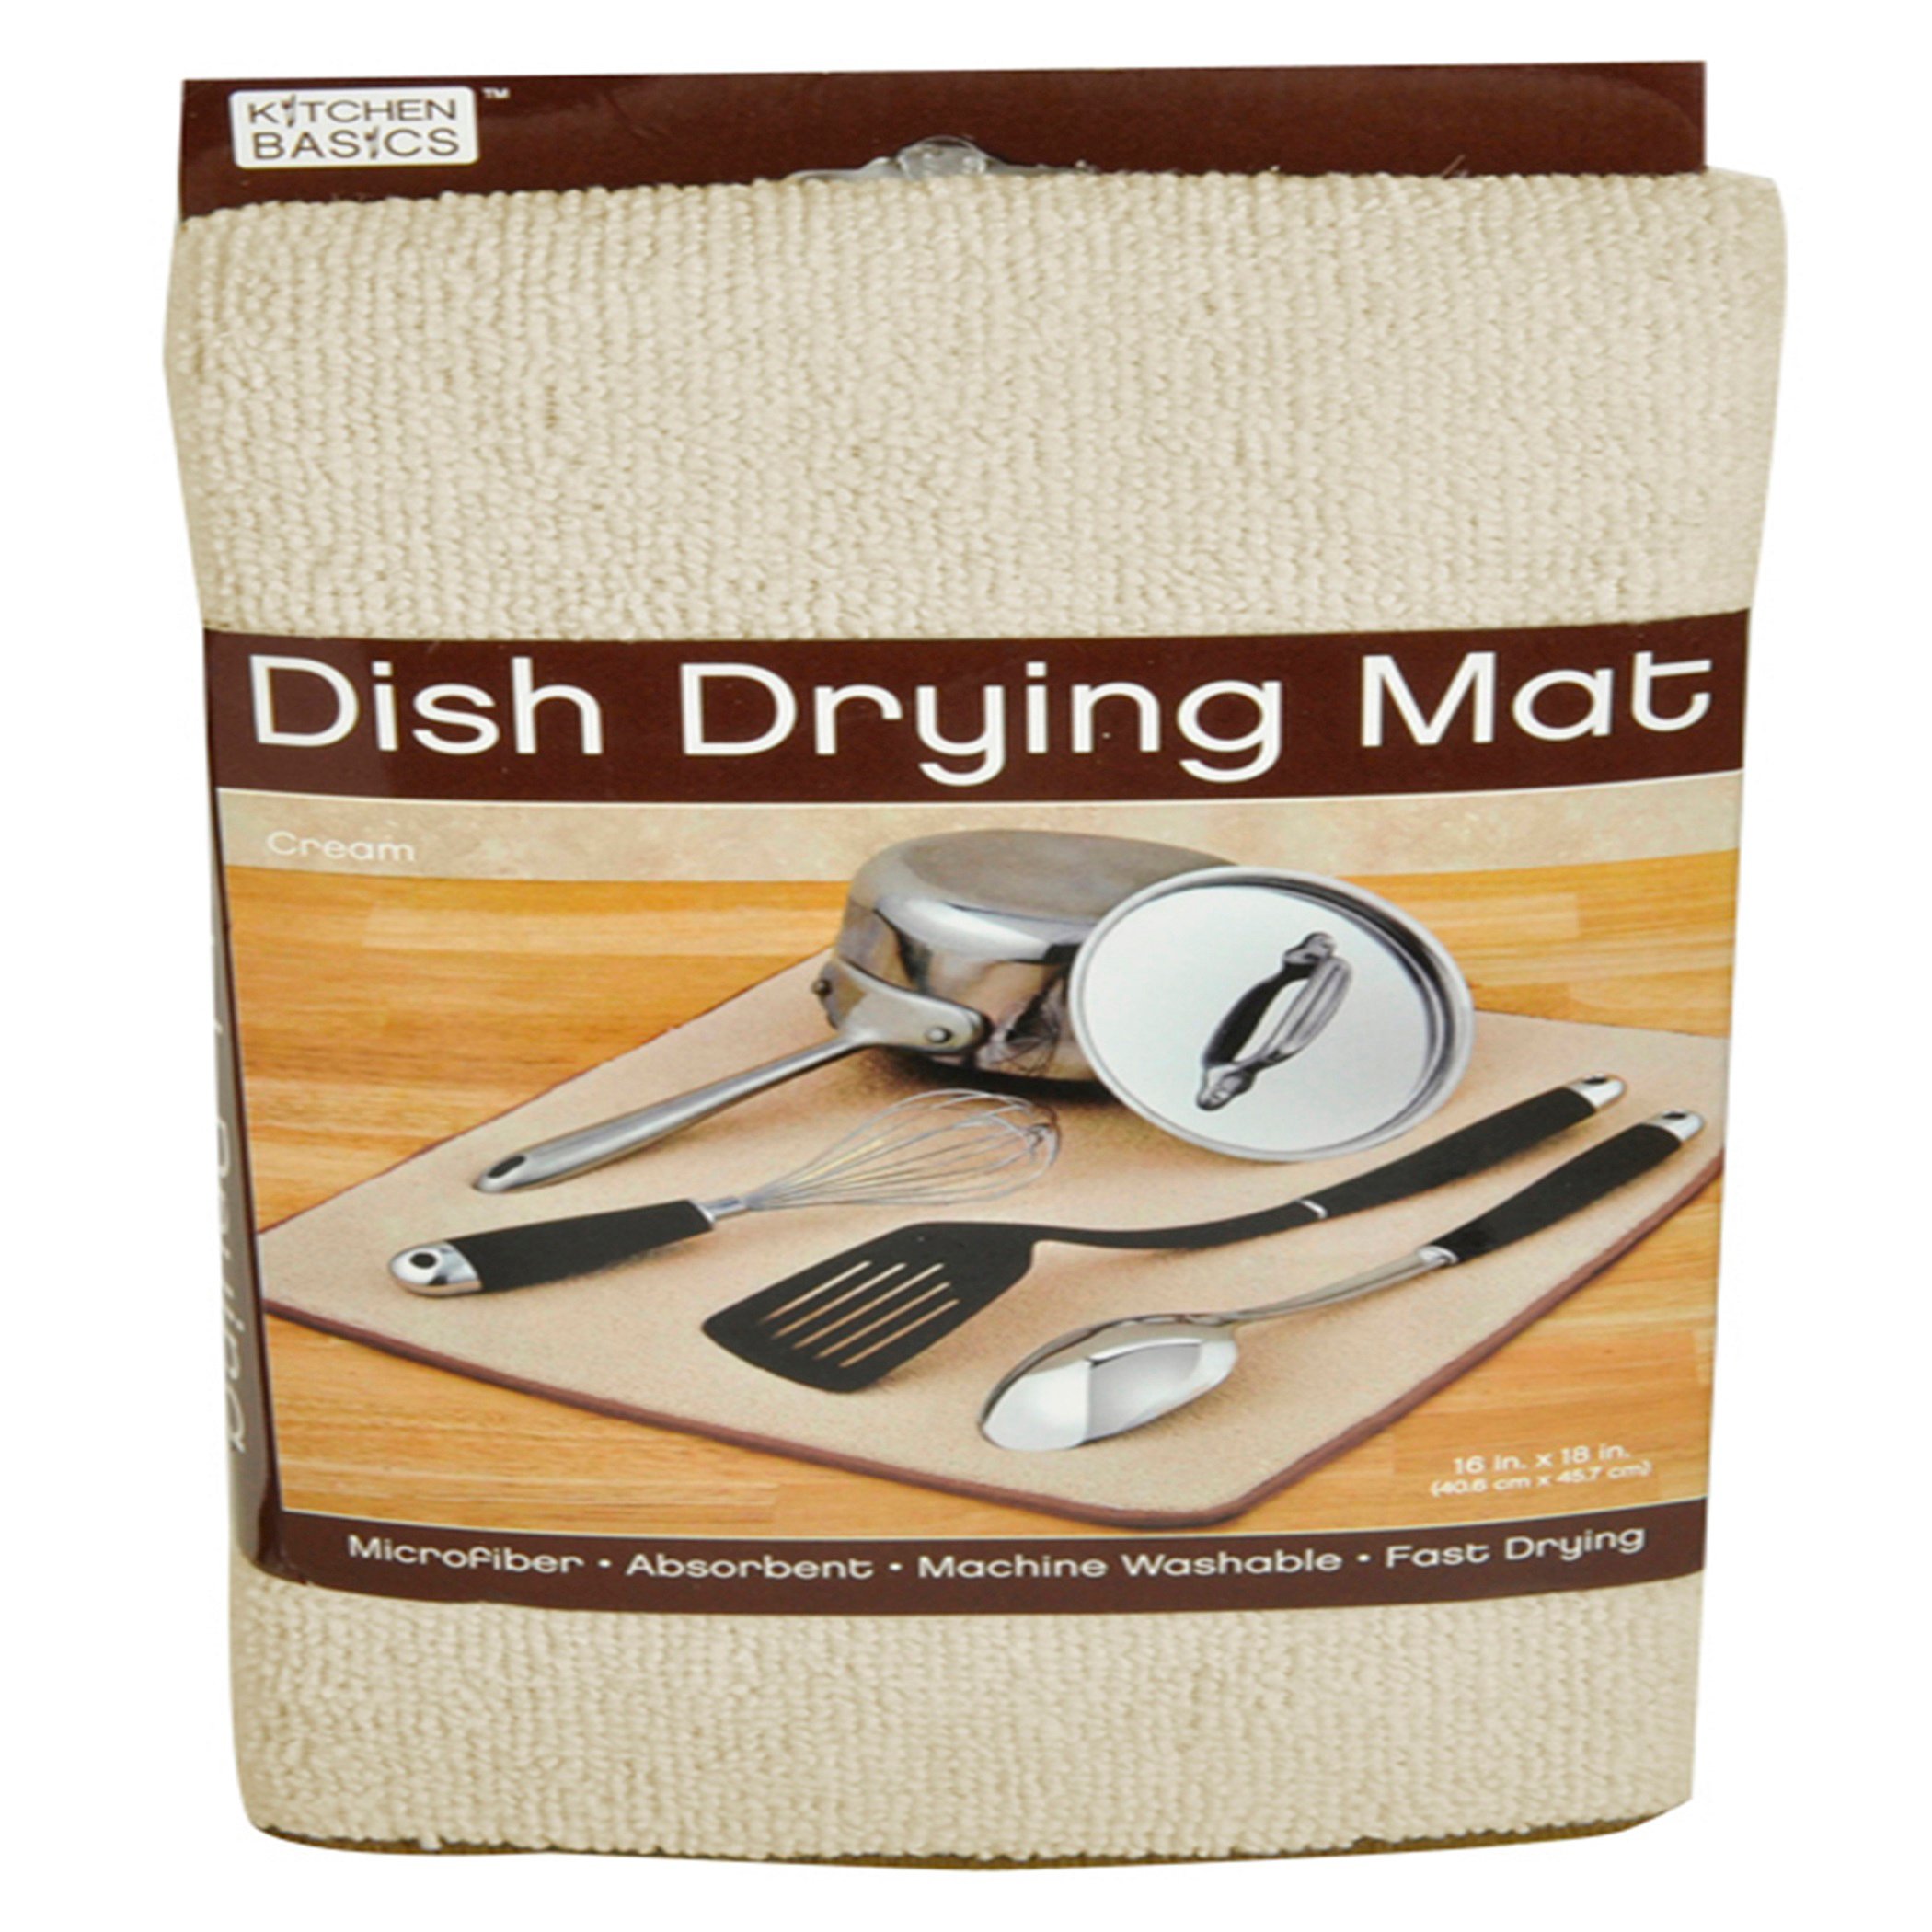 Kitchen Basics Dish Drying Mat - Cream Color - Shop Dish Drainers at H-E-B